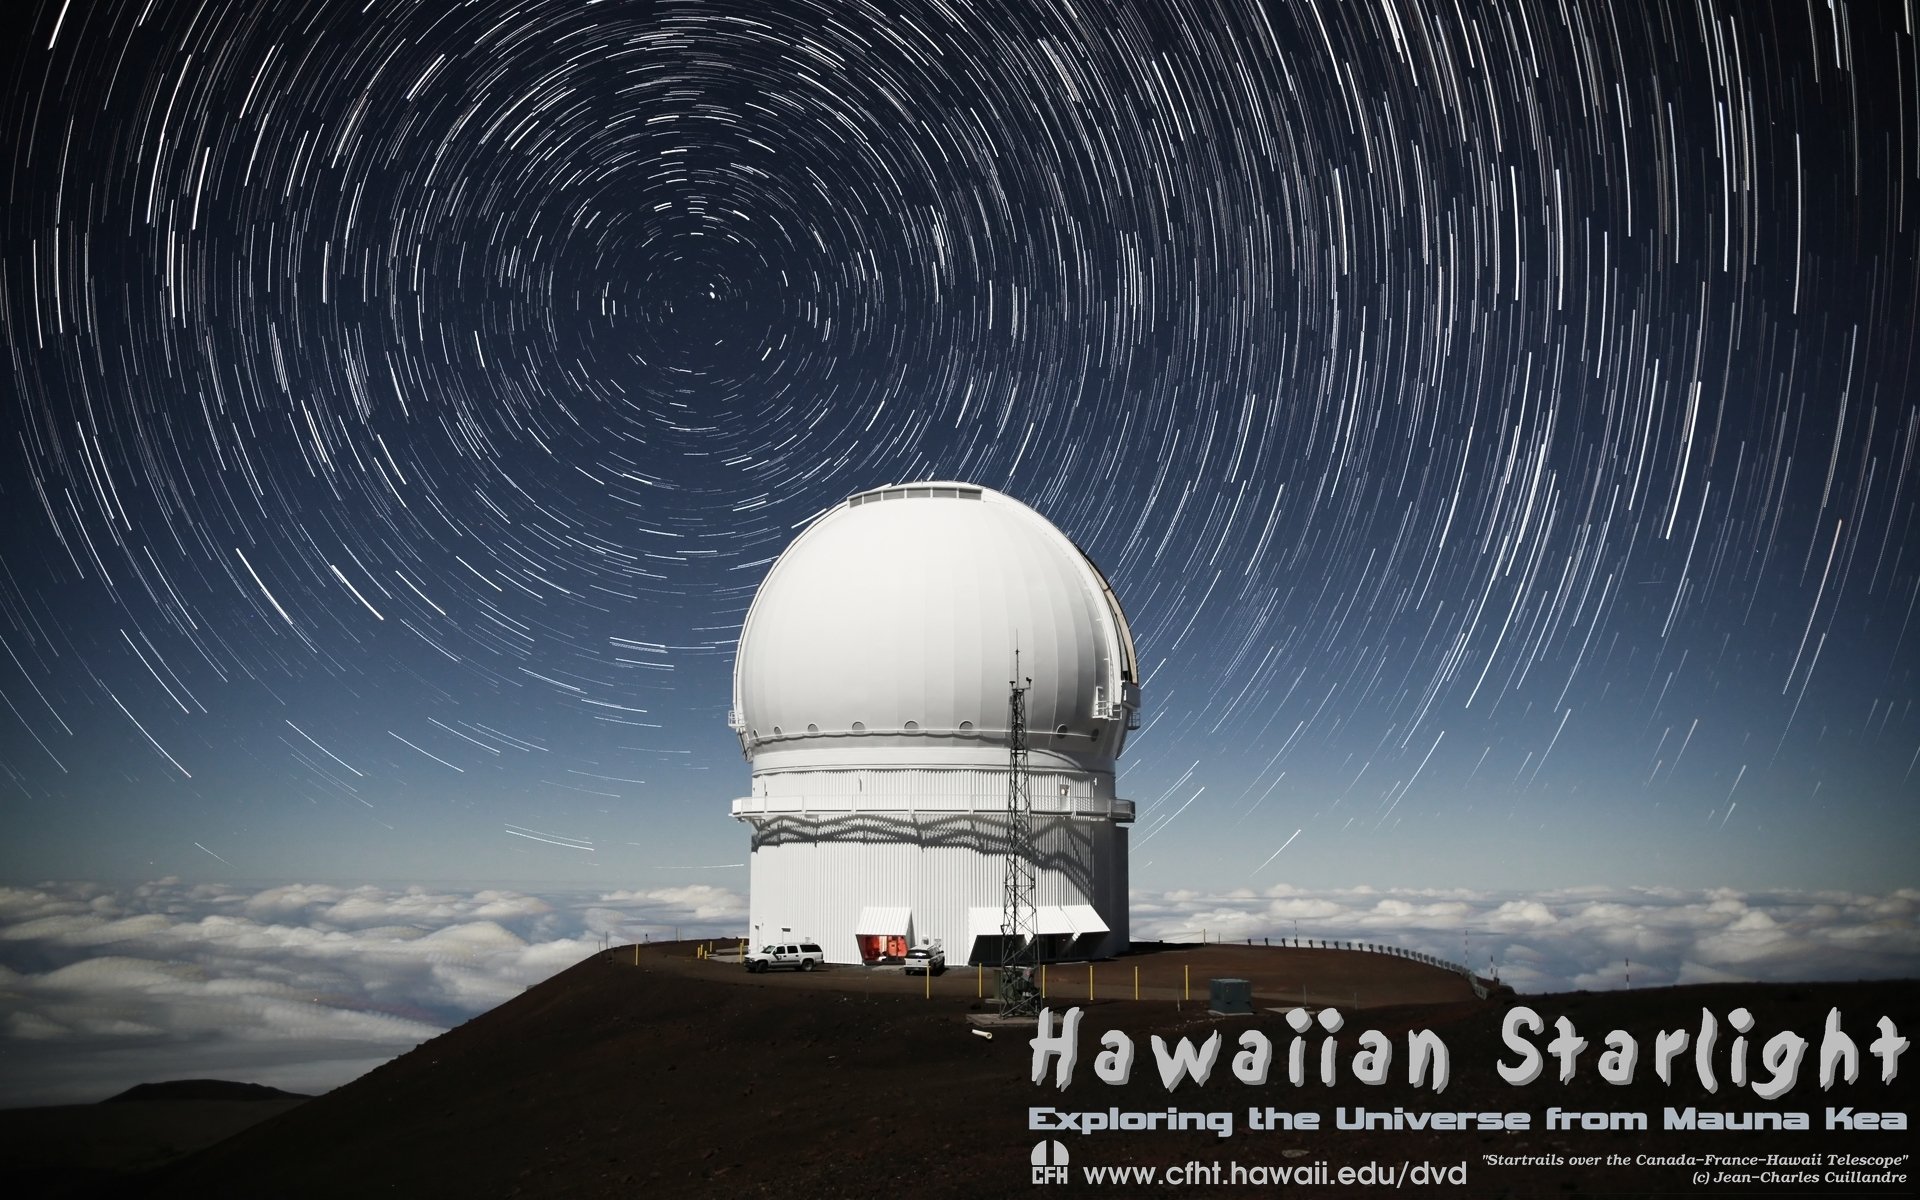 Hawaiian Starlight Film the Universe from Mauna Kea's Official Site